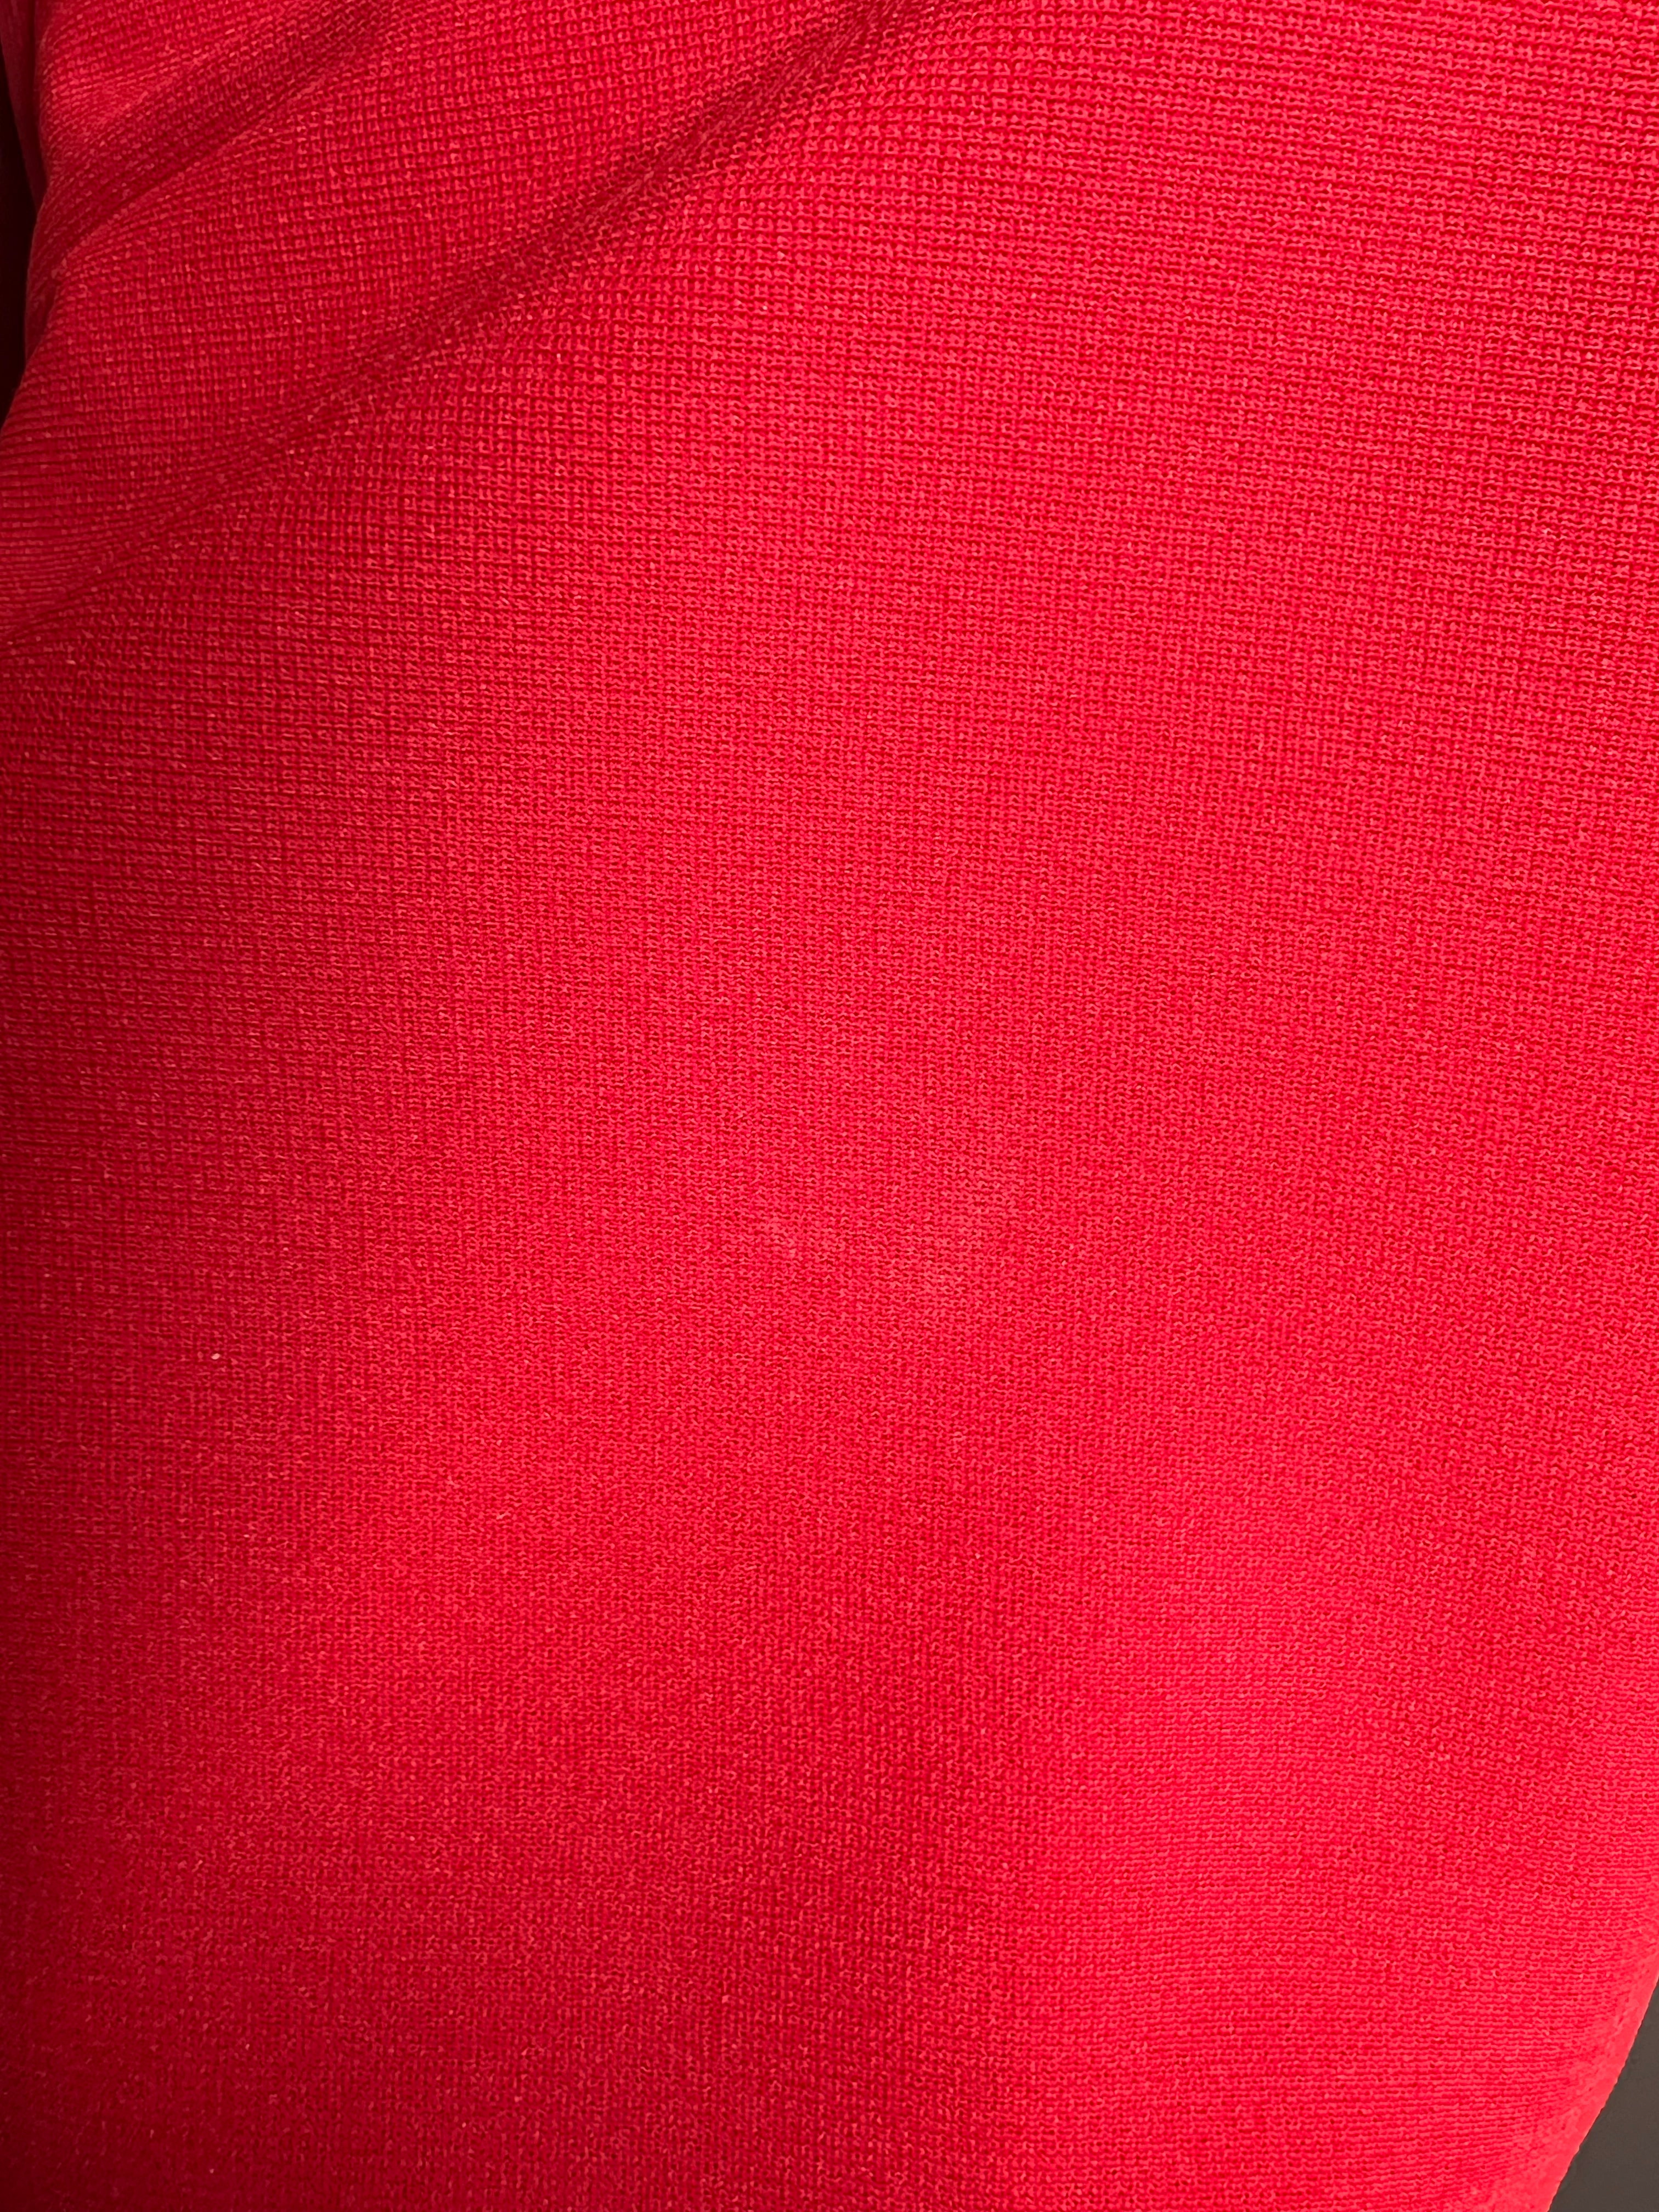 RARE Red Dress As Seen on Rachel on Friends - Size 12